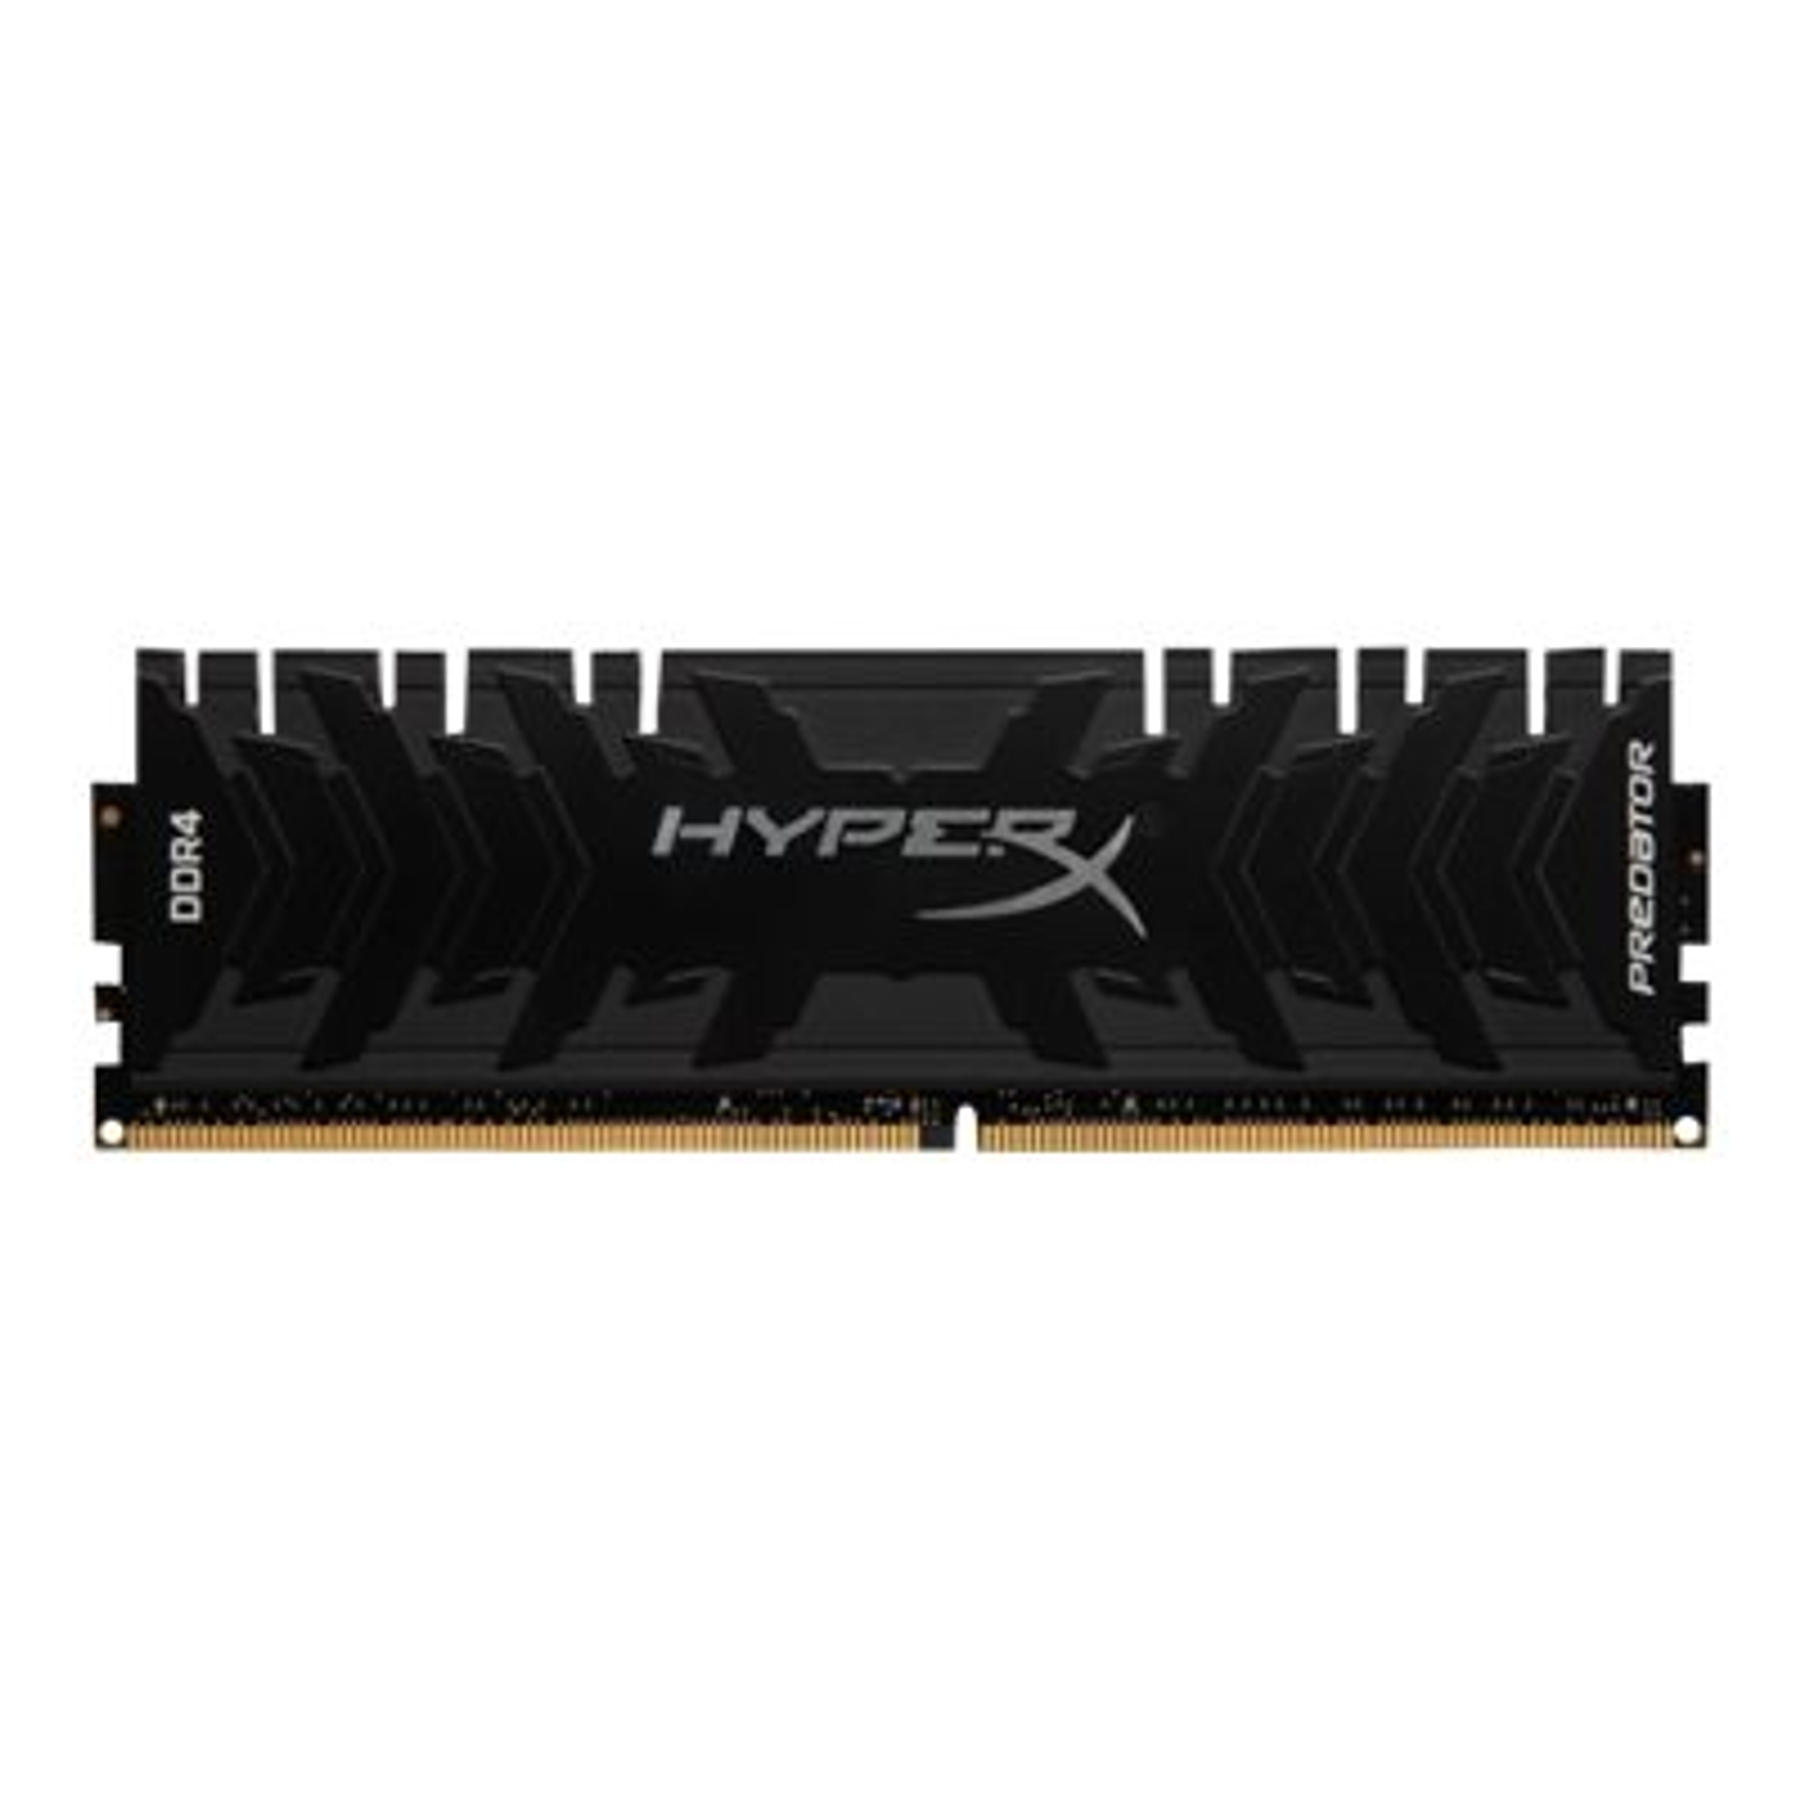 HyperX RAM 8GB 3200MHz DDR4 DIMM Predator